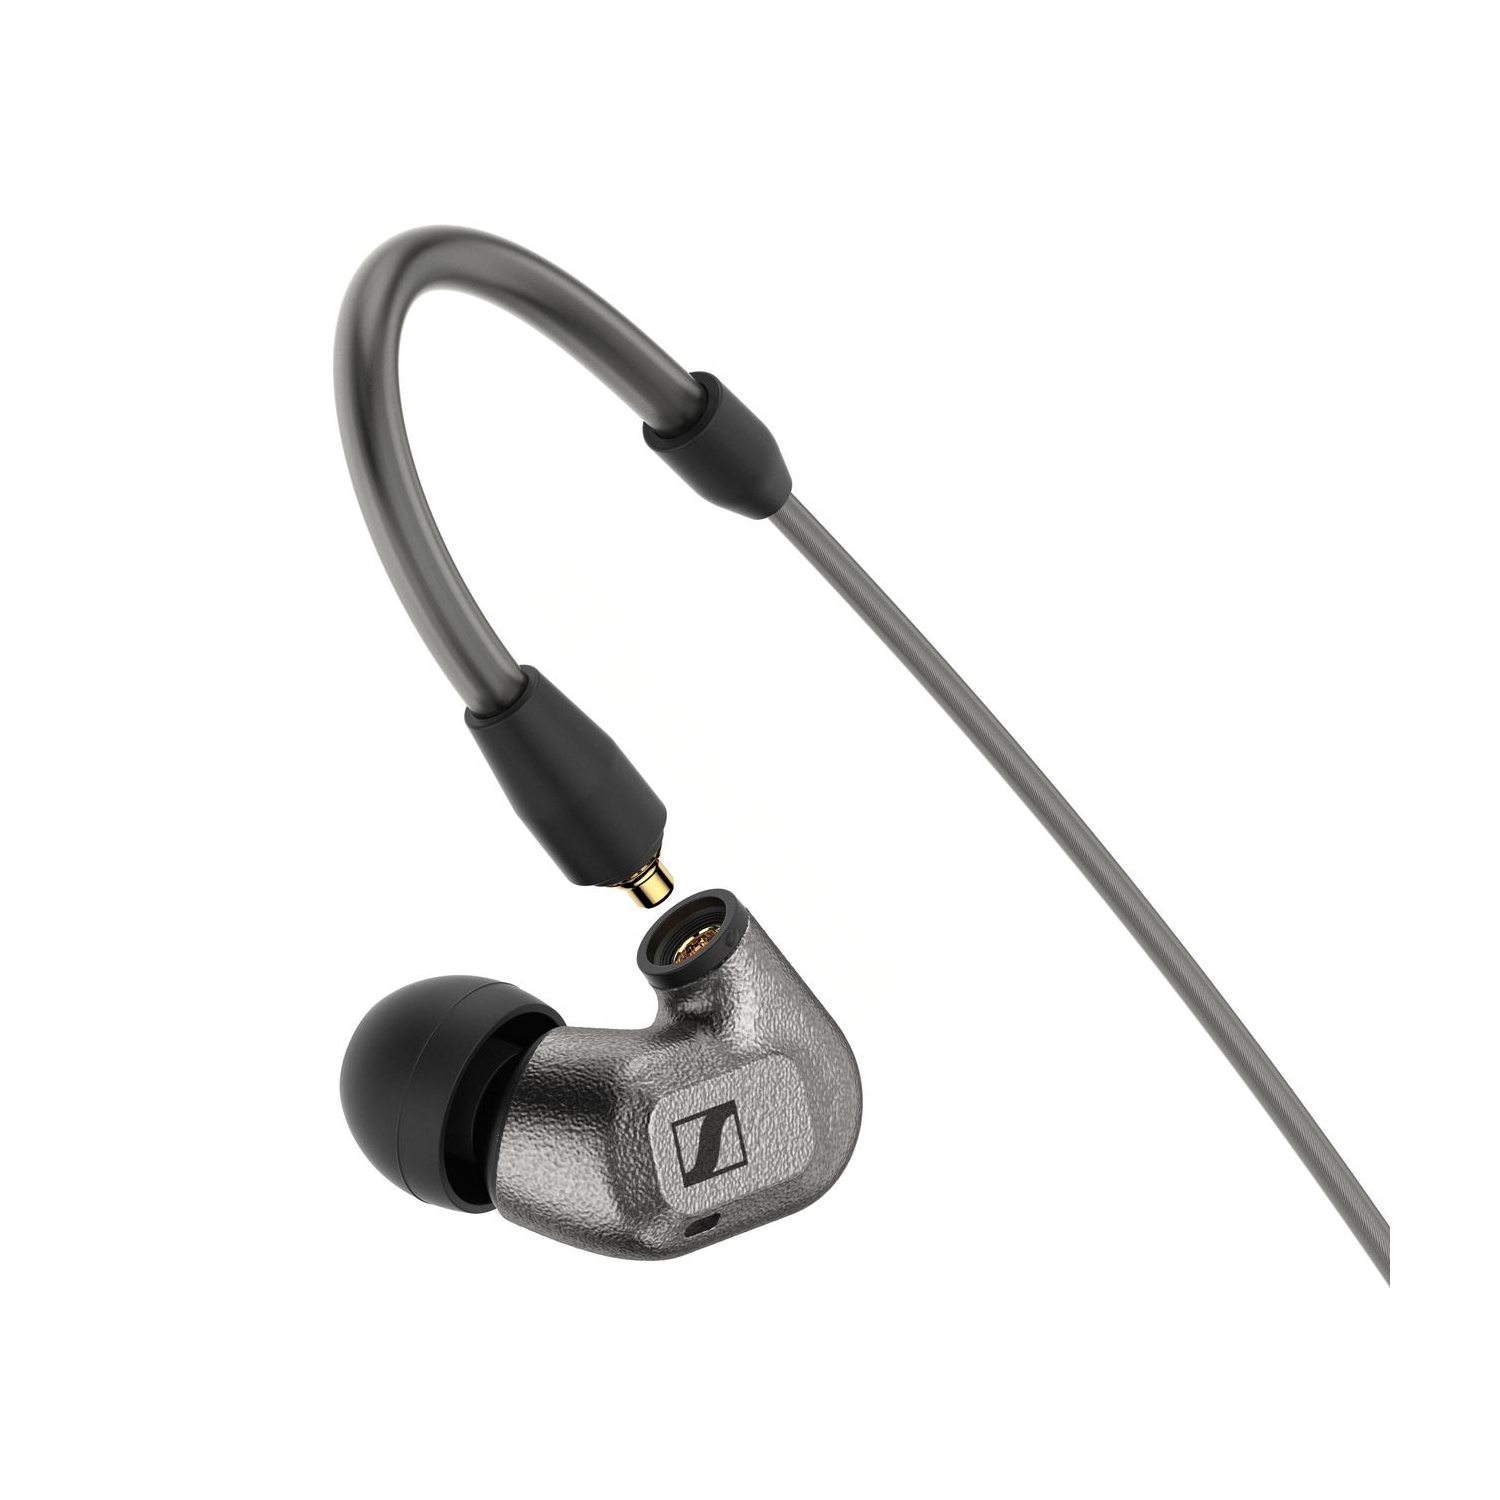 Sennheiser IE 600 Audiophile In-Ear Monitors - TrueResponse 